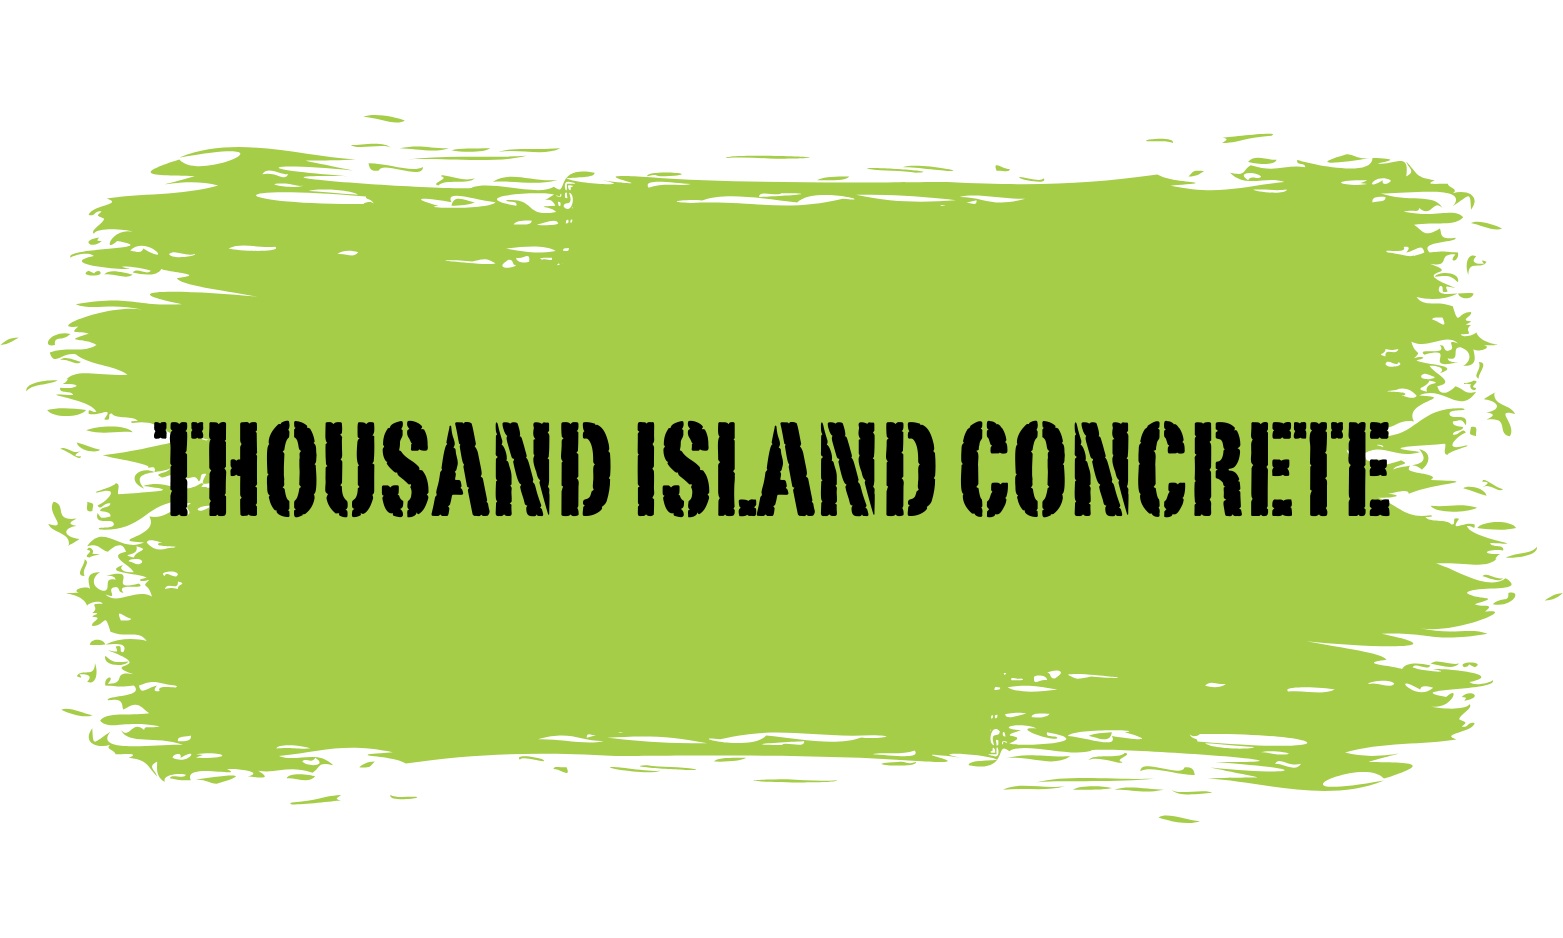 Thousand island concrete